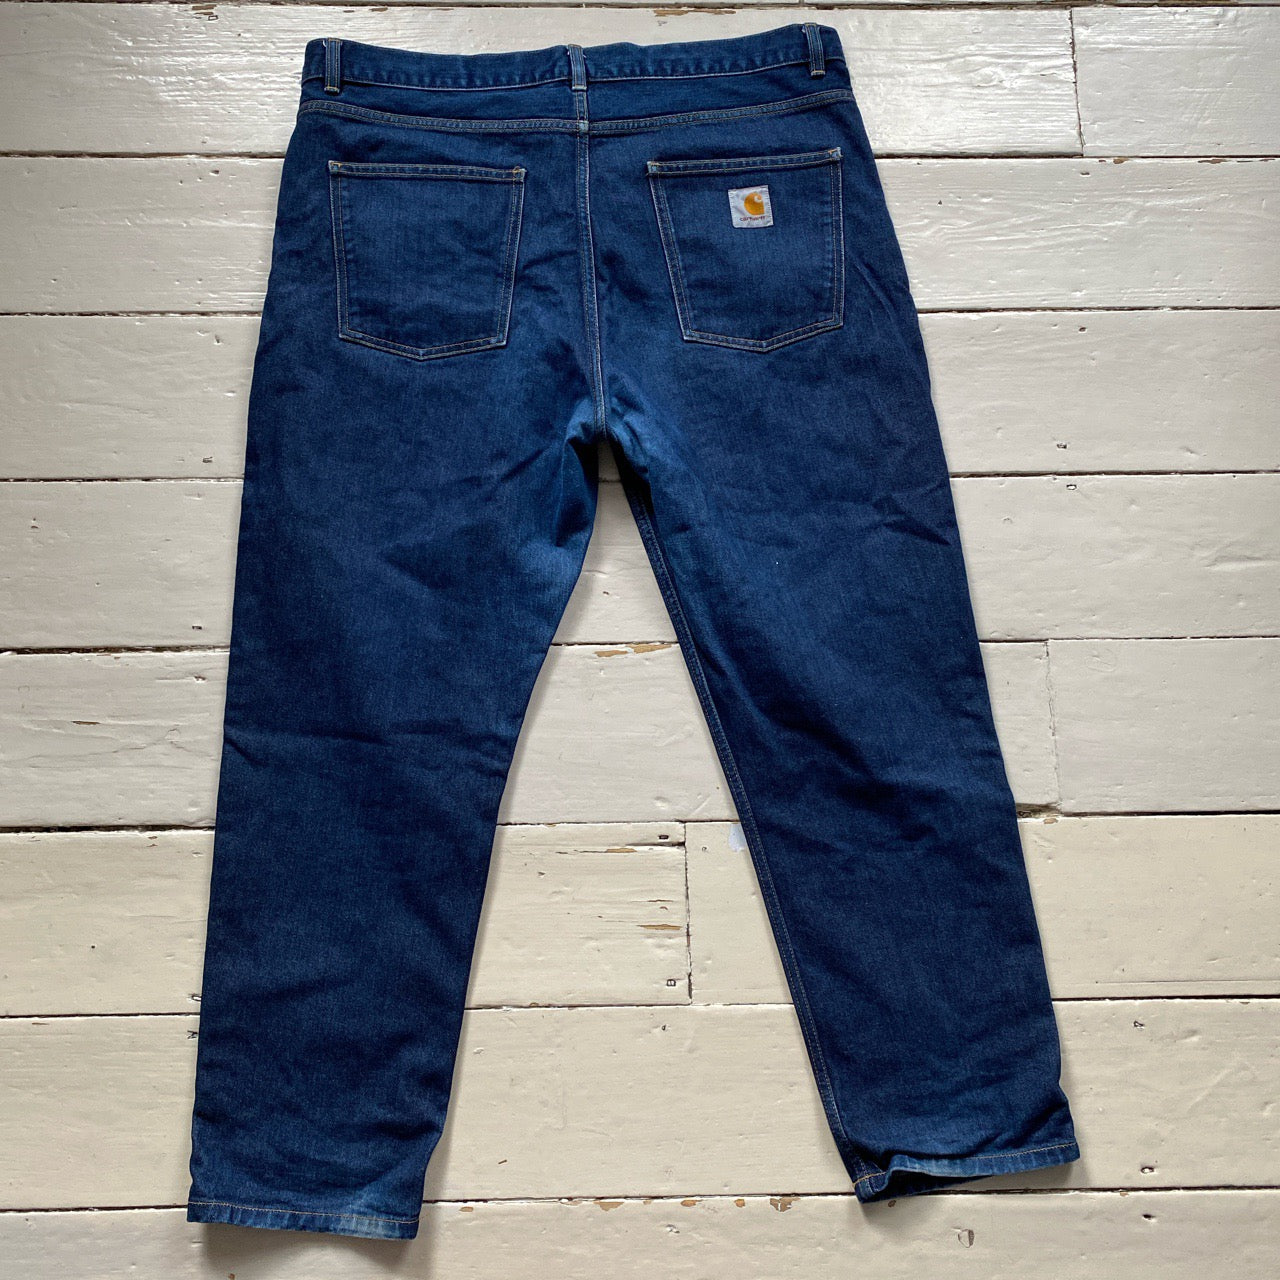 Carhartt Newel Pant Jeans (38/28)